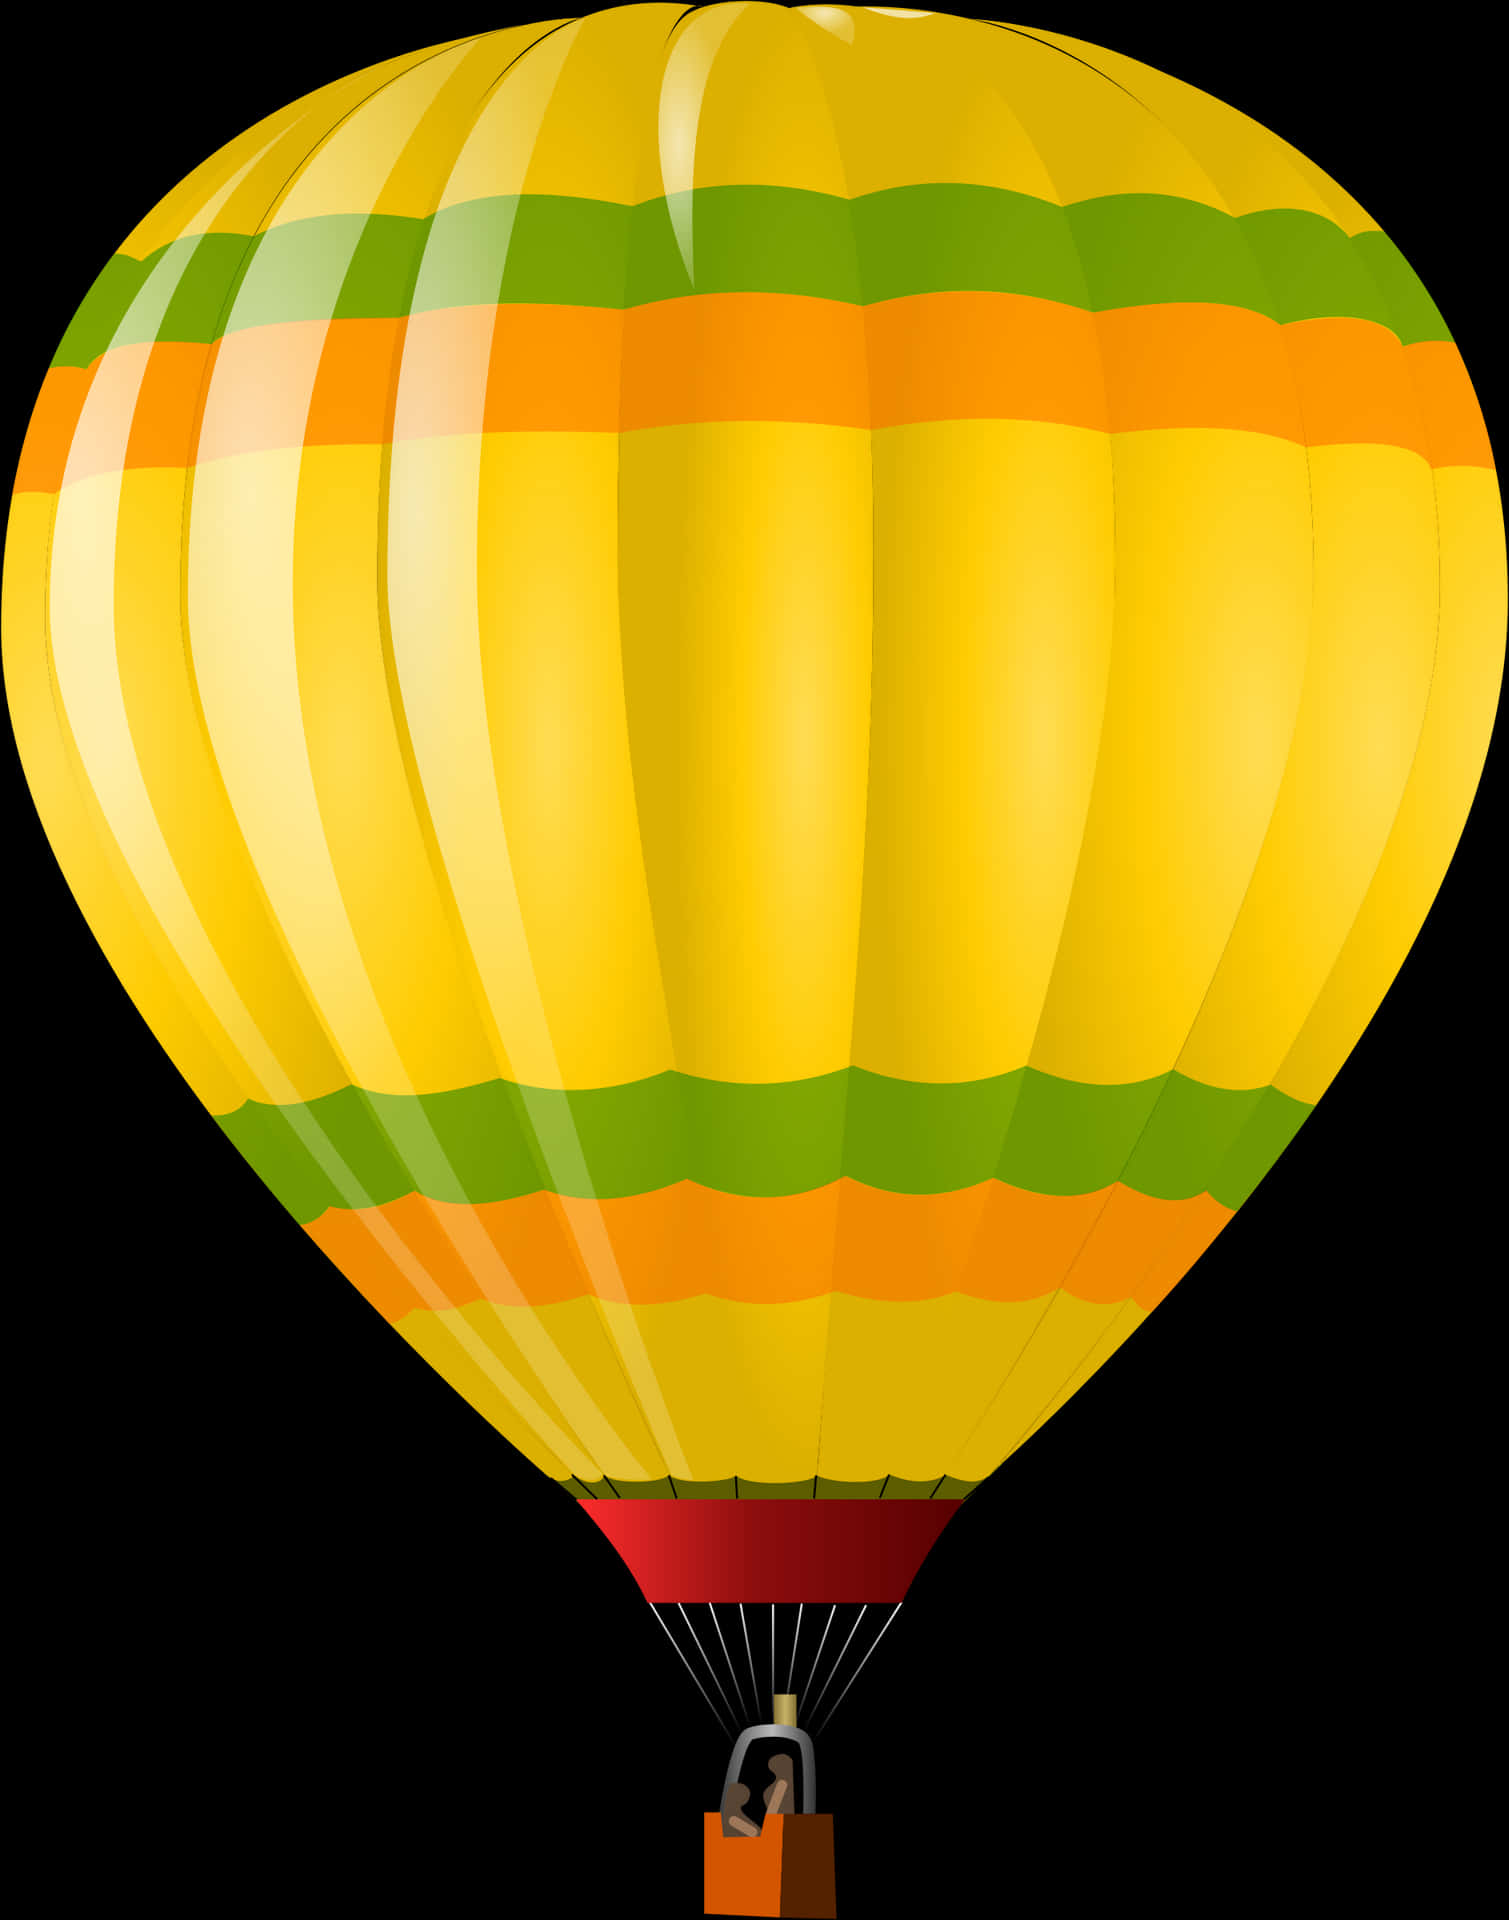 Colorful Hot Air Balloon Illustration PNG